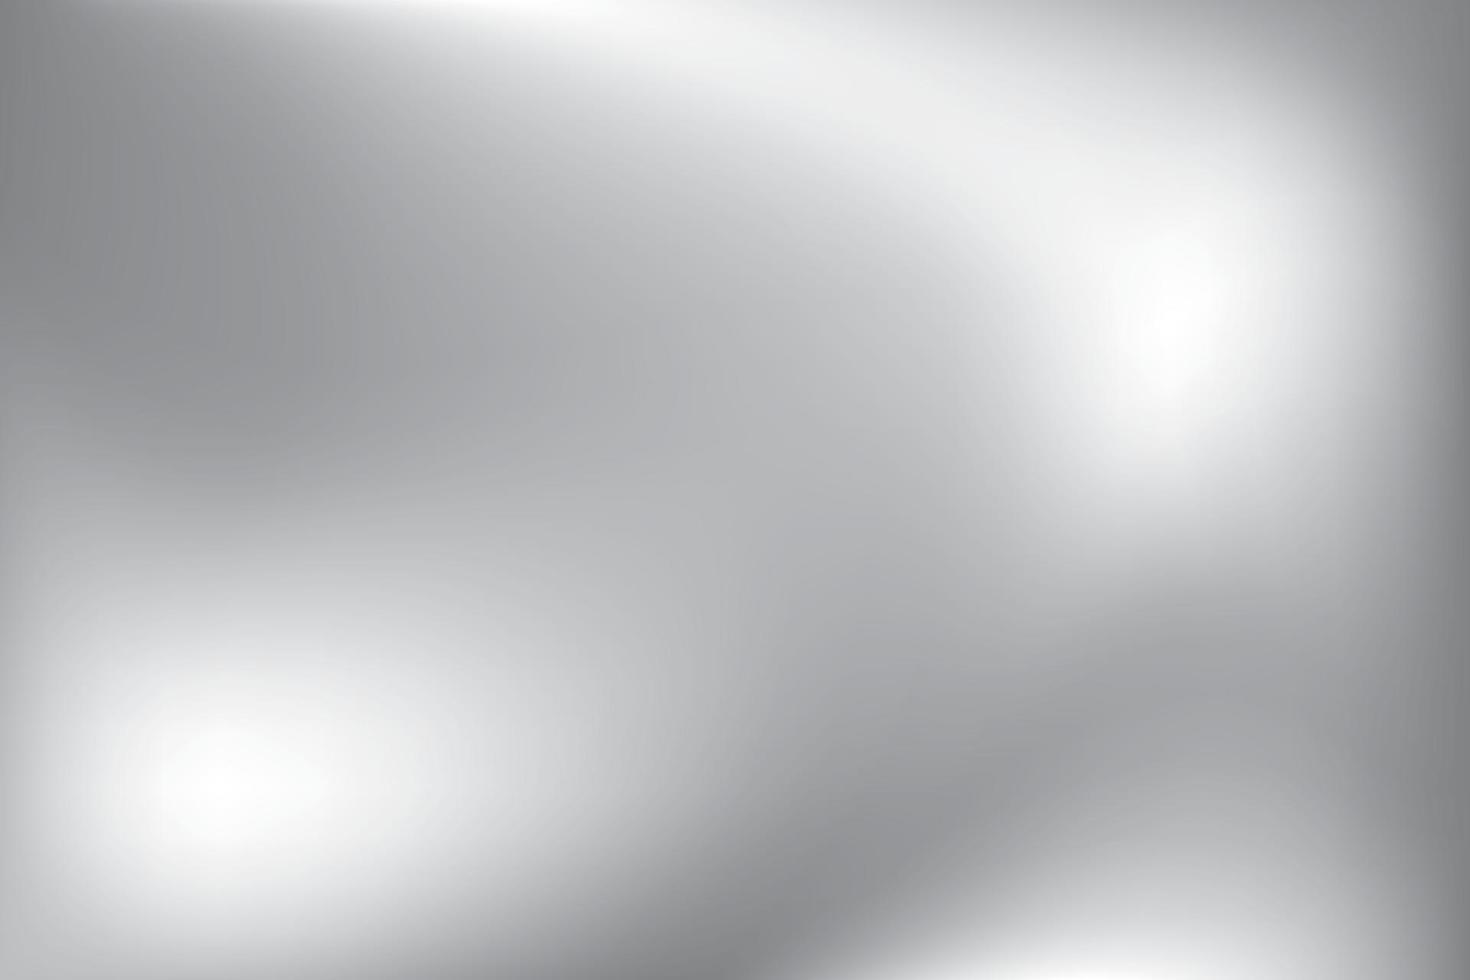 abstrato gradiente branco e cinza. ilustração vetorial. vetor